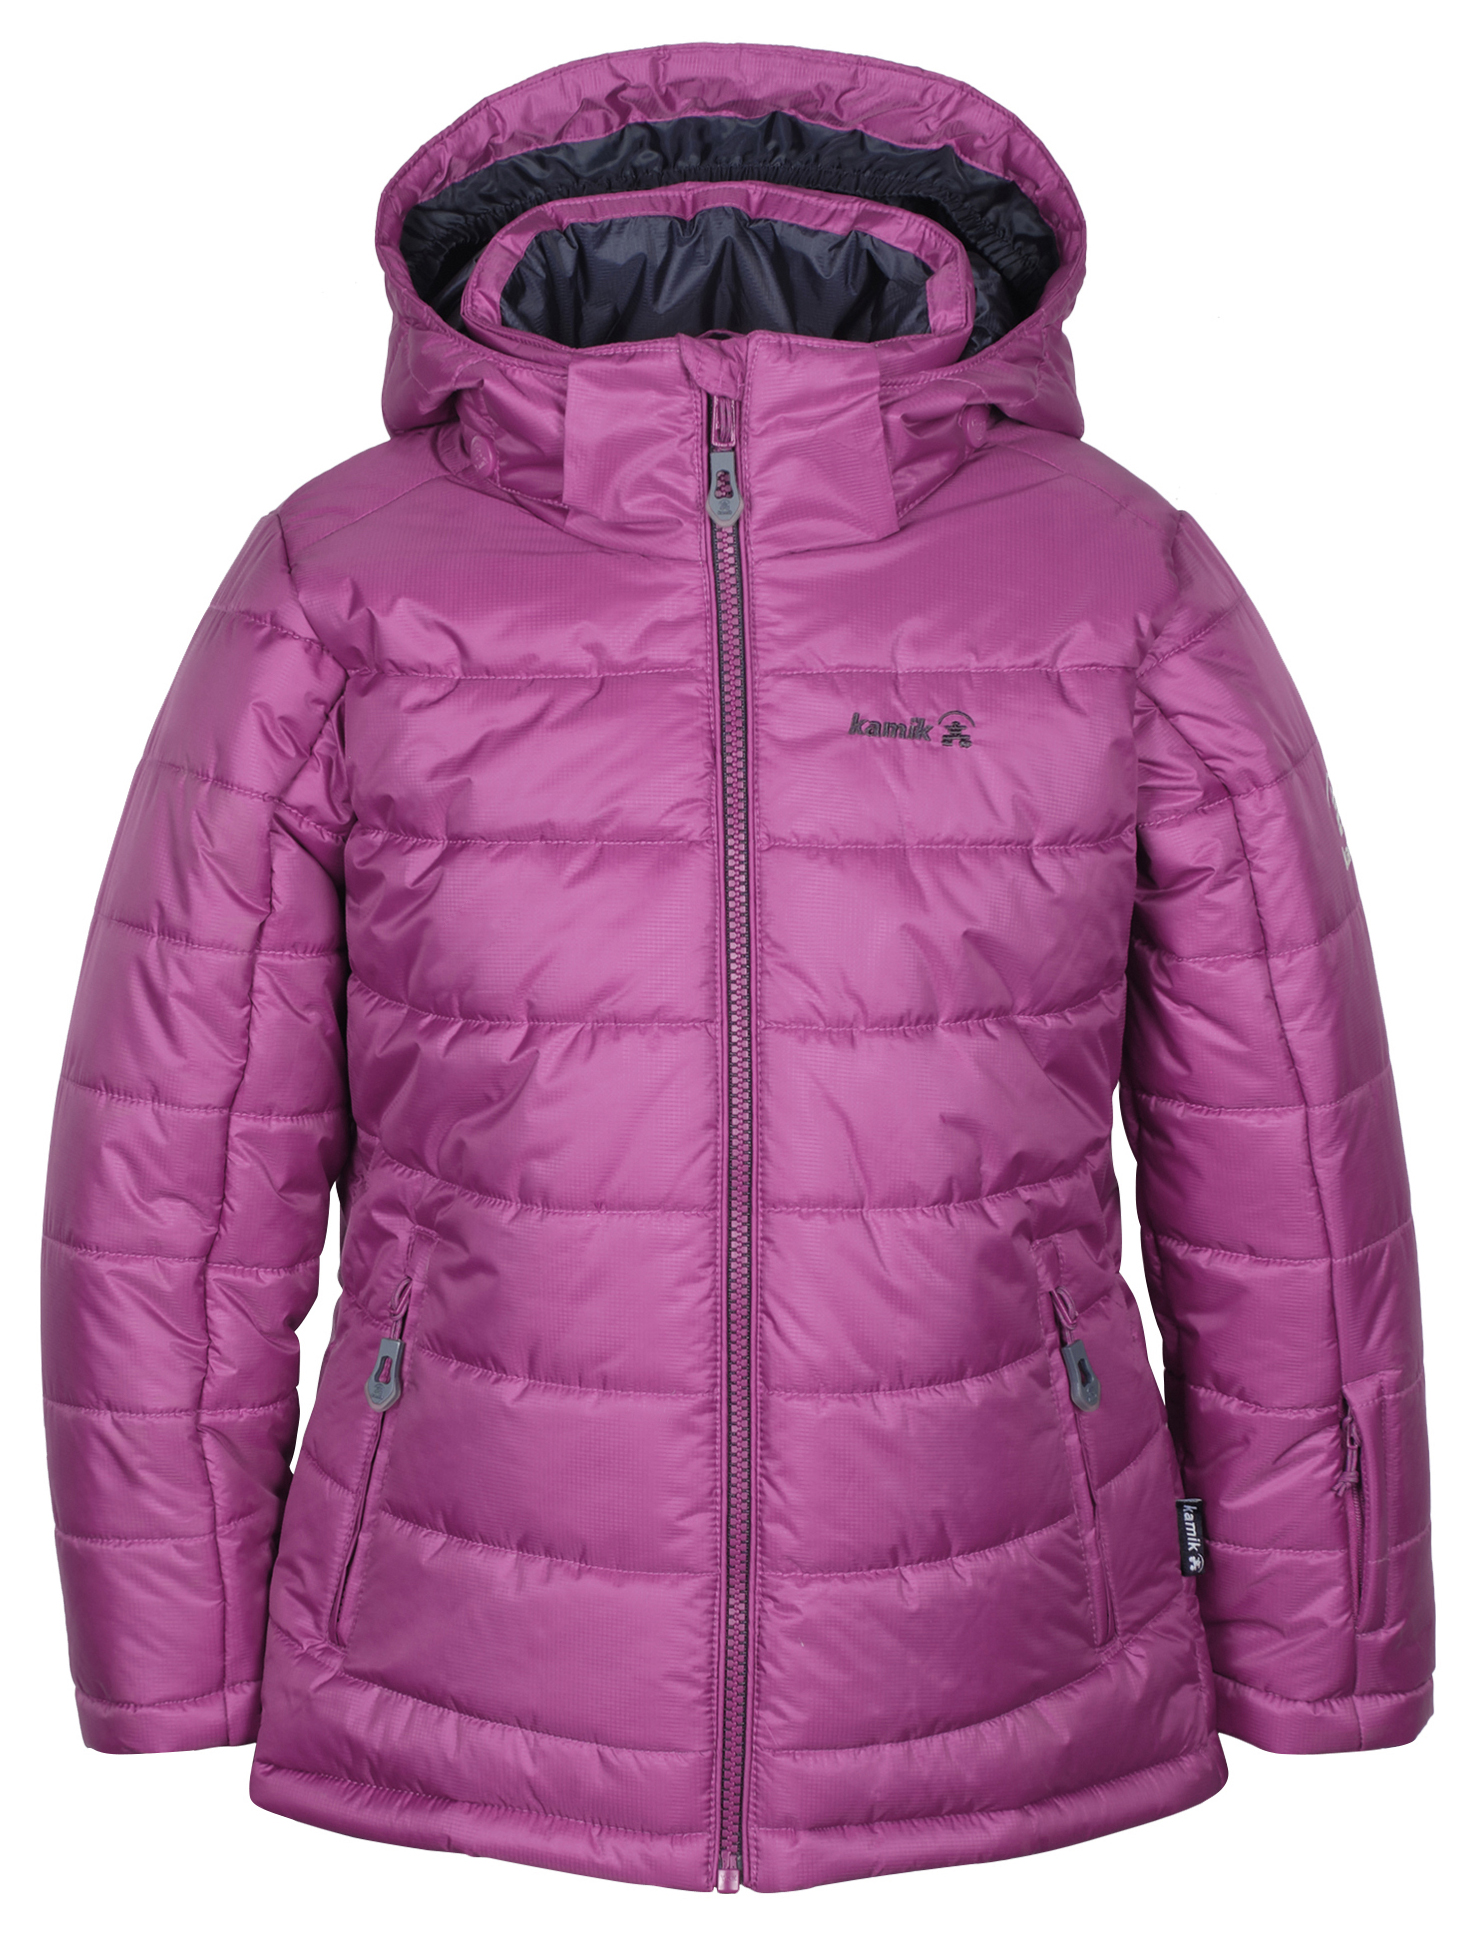 Kamik Aria 2 Insulated Ski Jacket Girls